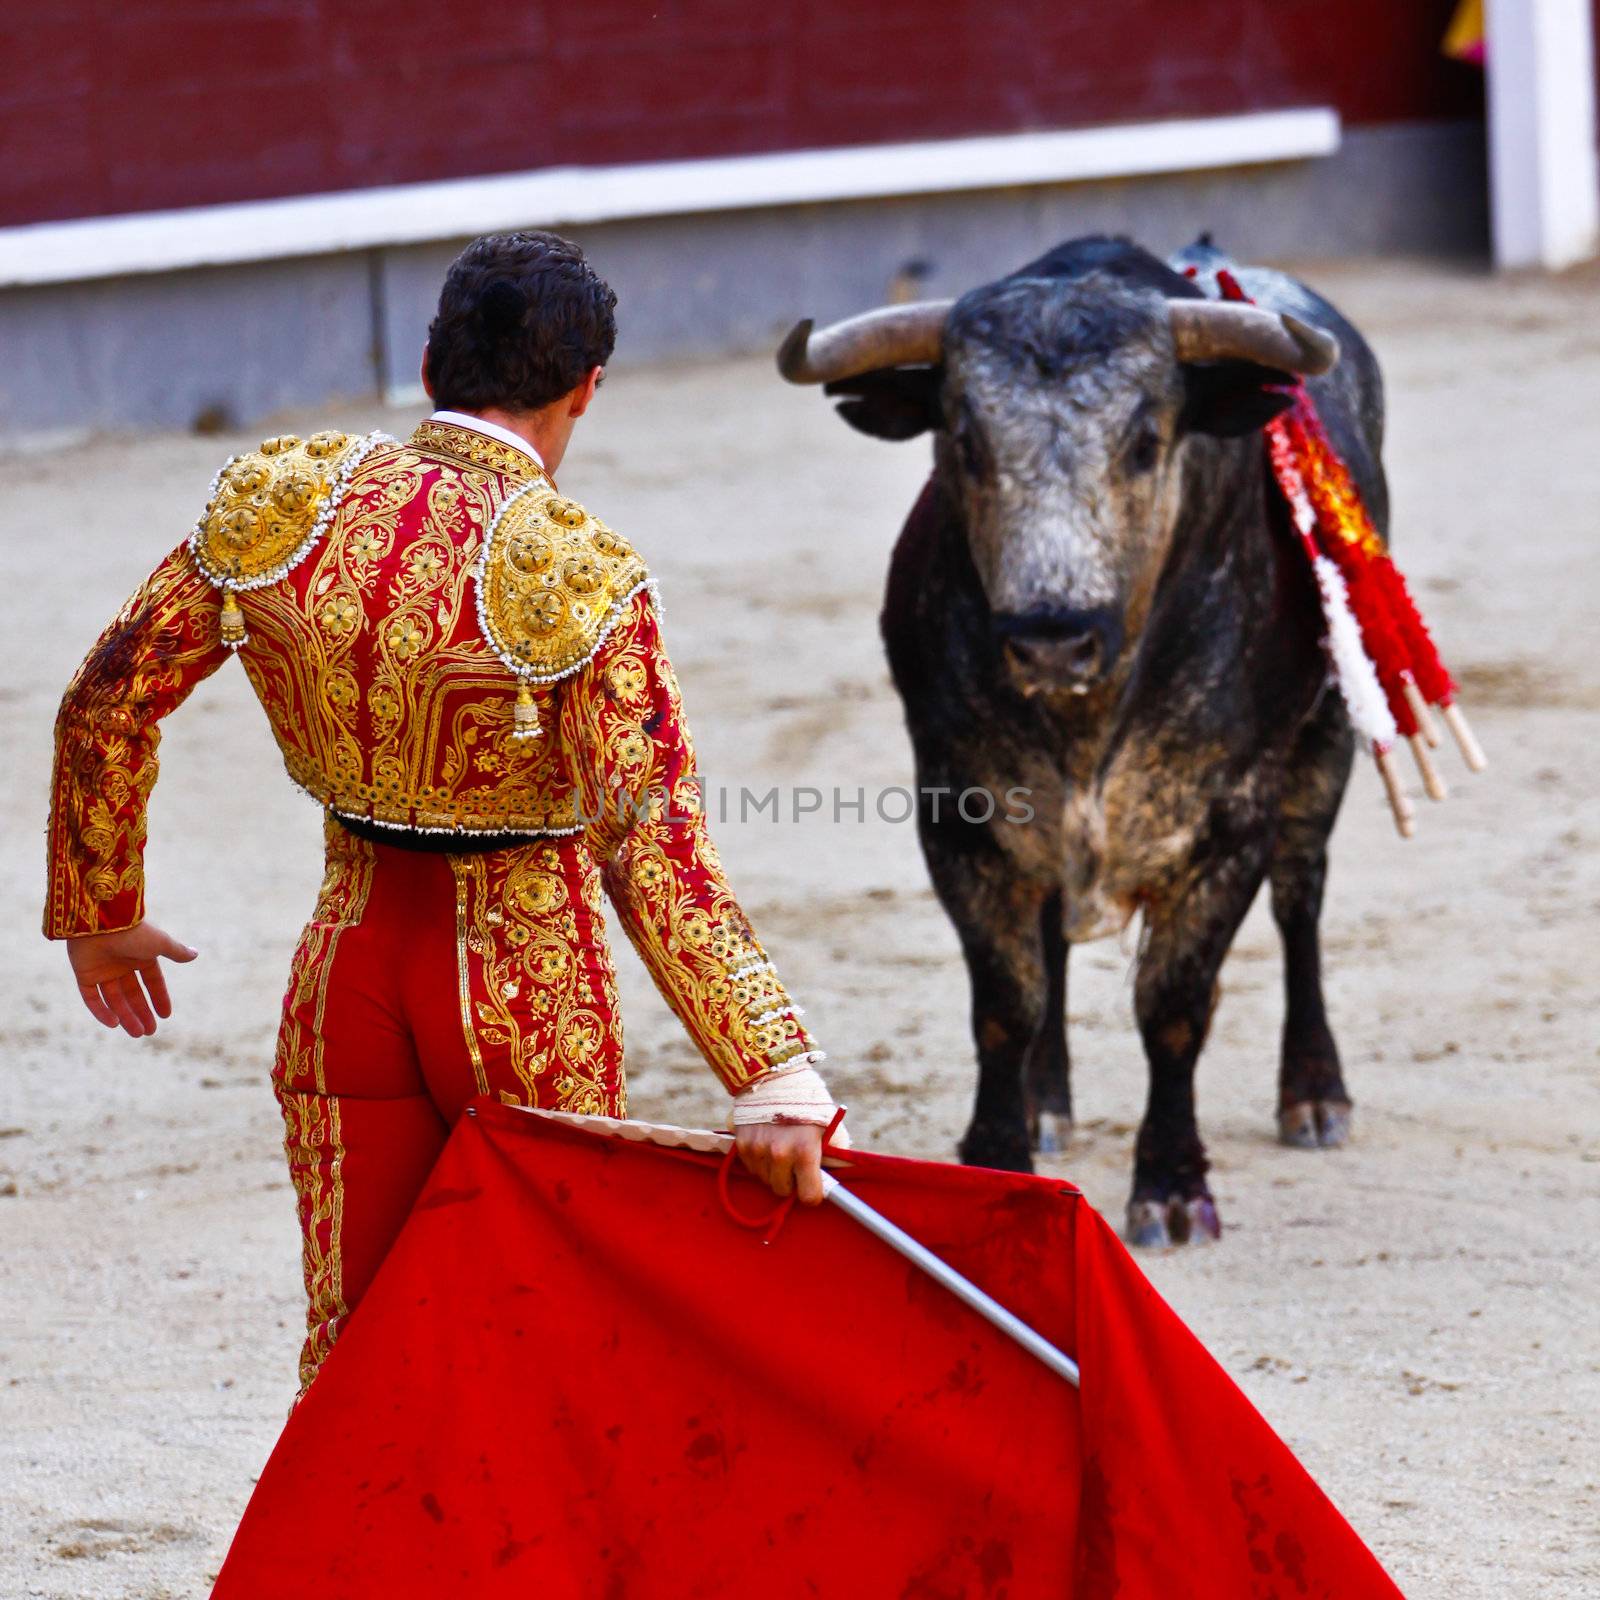 Traditional corrida - bullfighting in spain by kasto